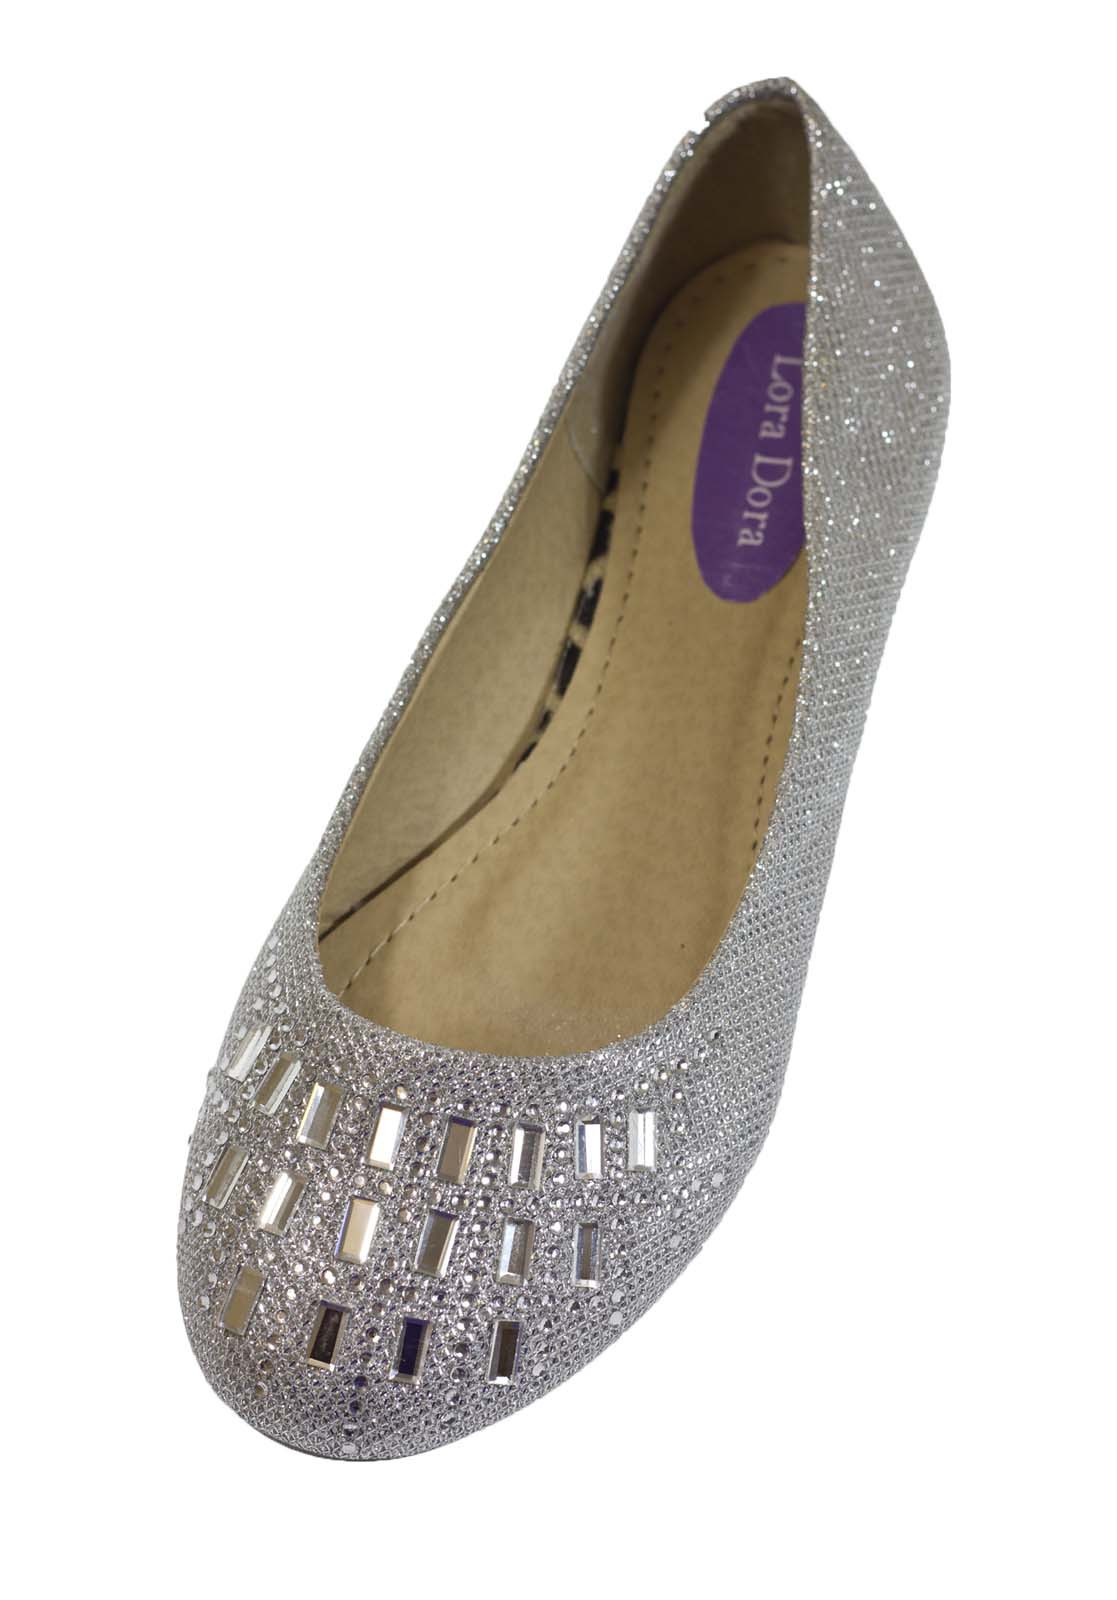 Ballerina Shoes For Wedding
 Womens Glitter Ballet Pumps Flat Diamante Wedding Bridal